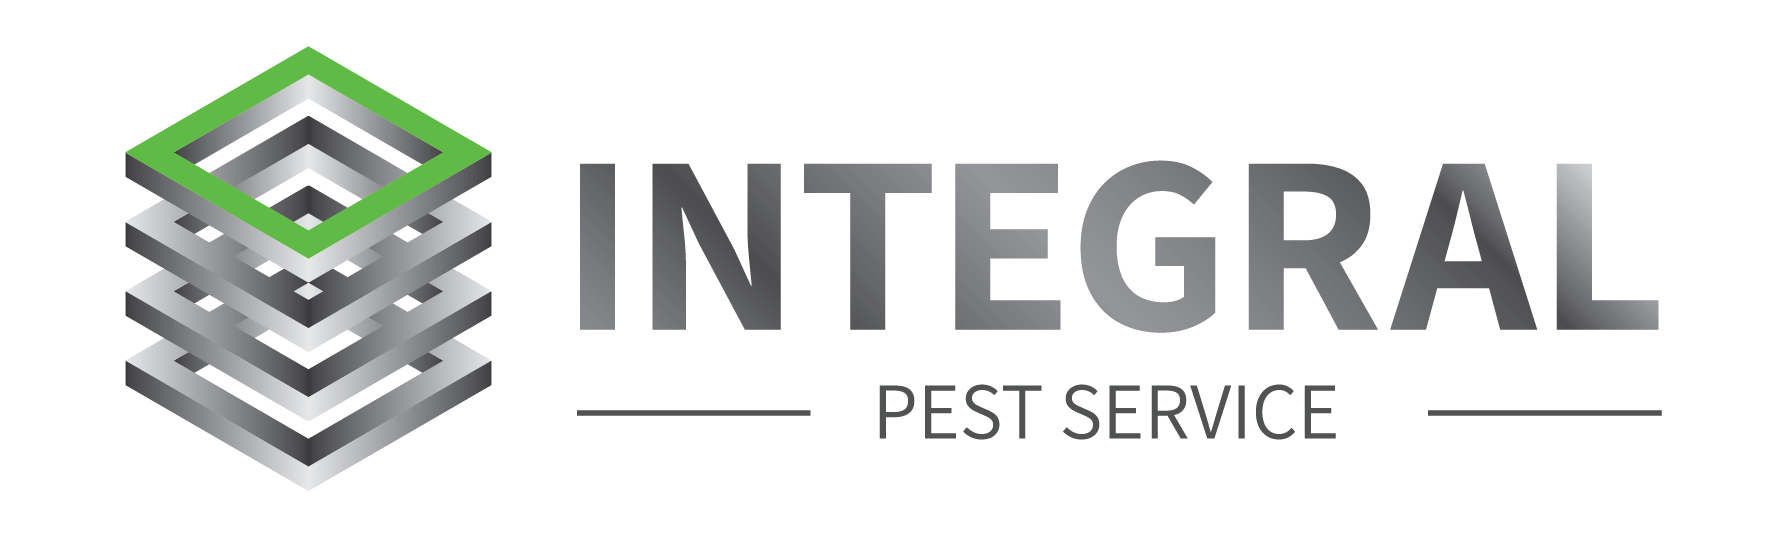 Integral Pest Services